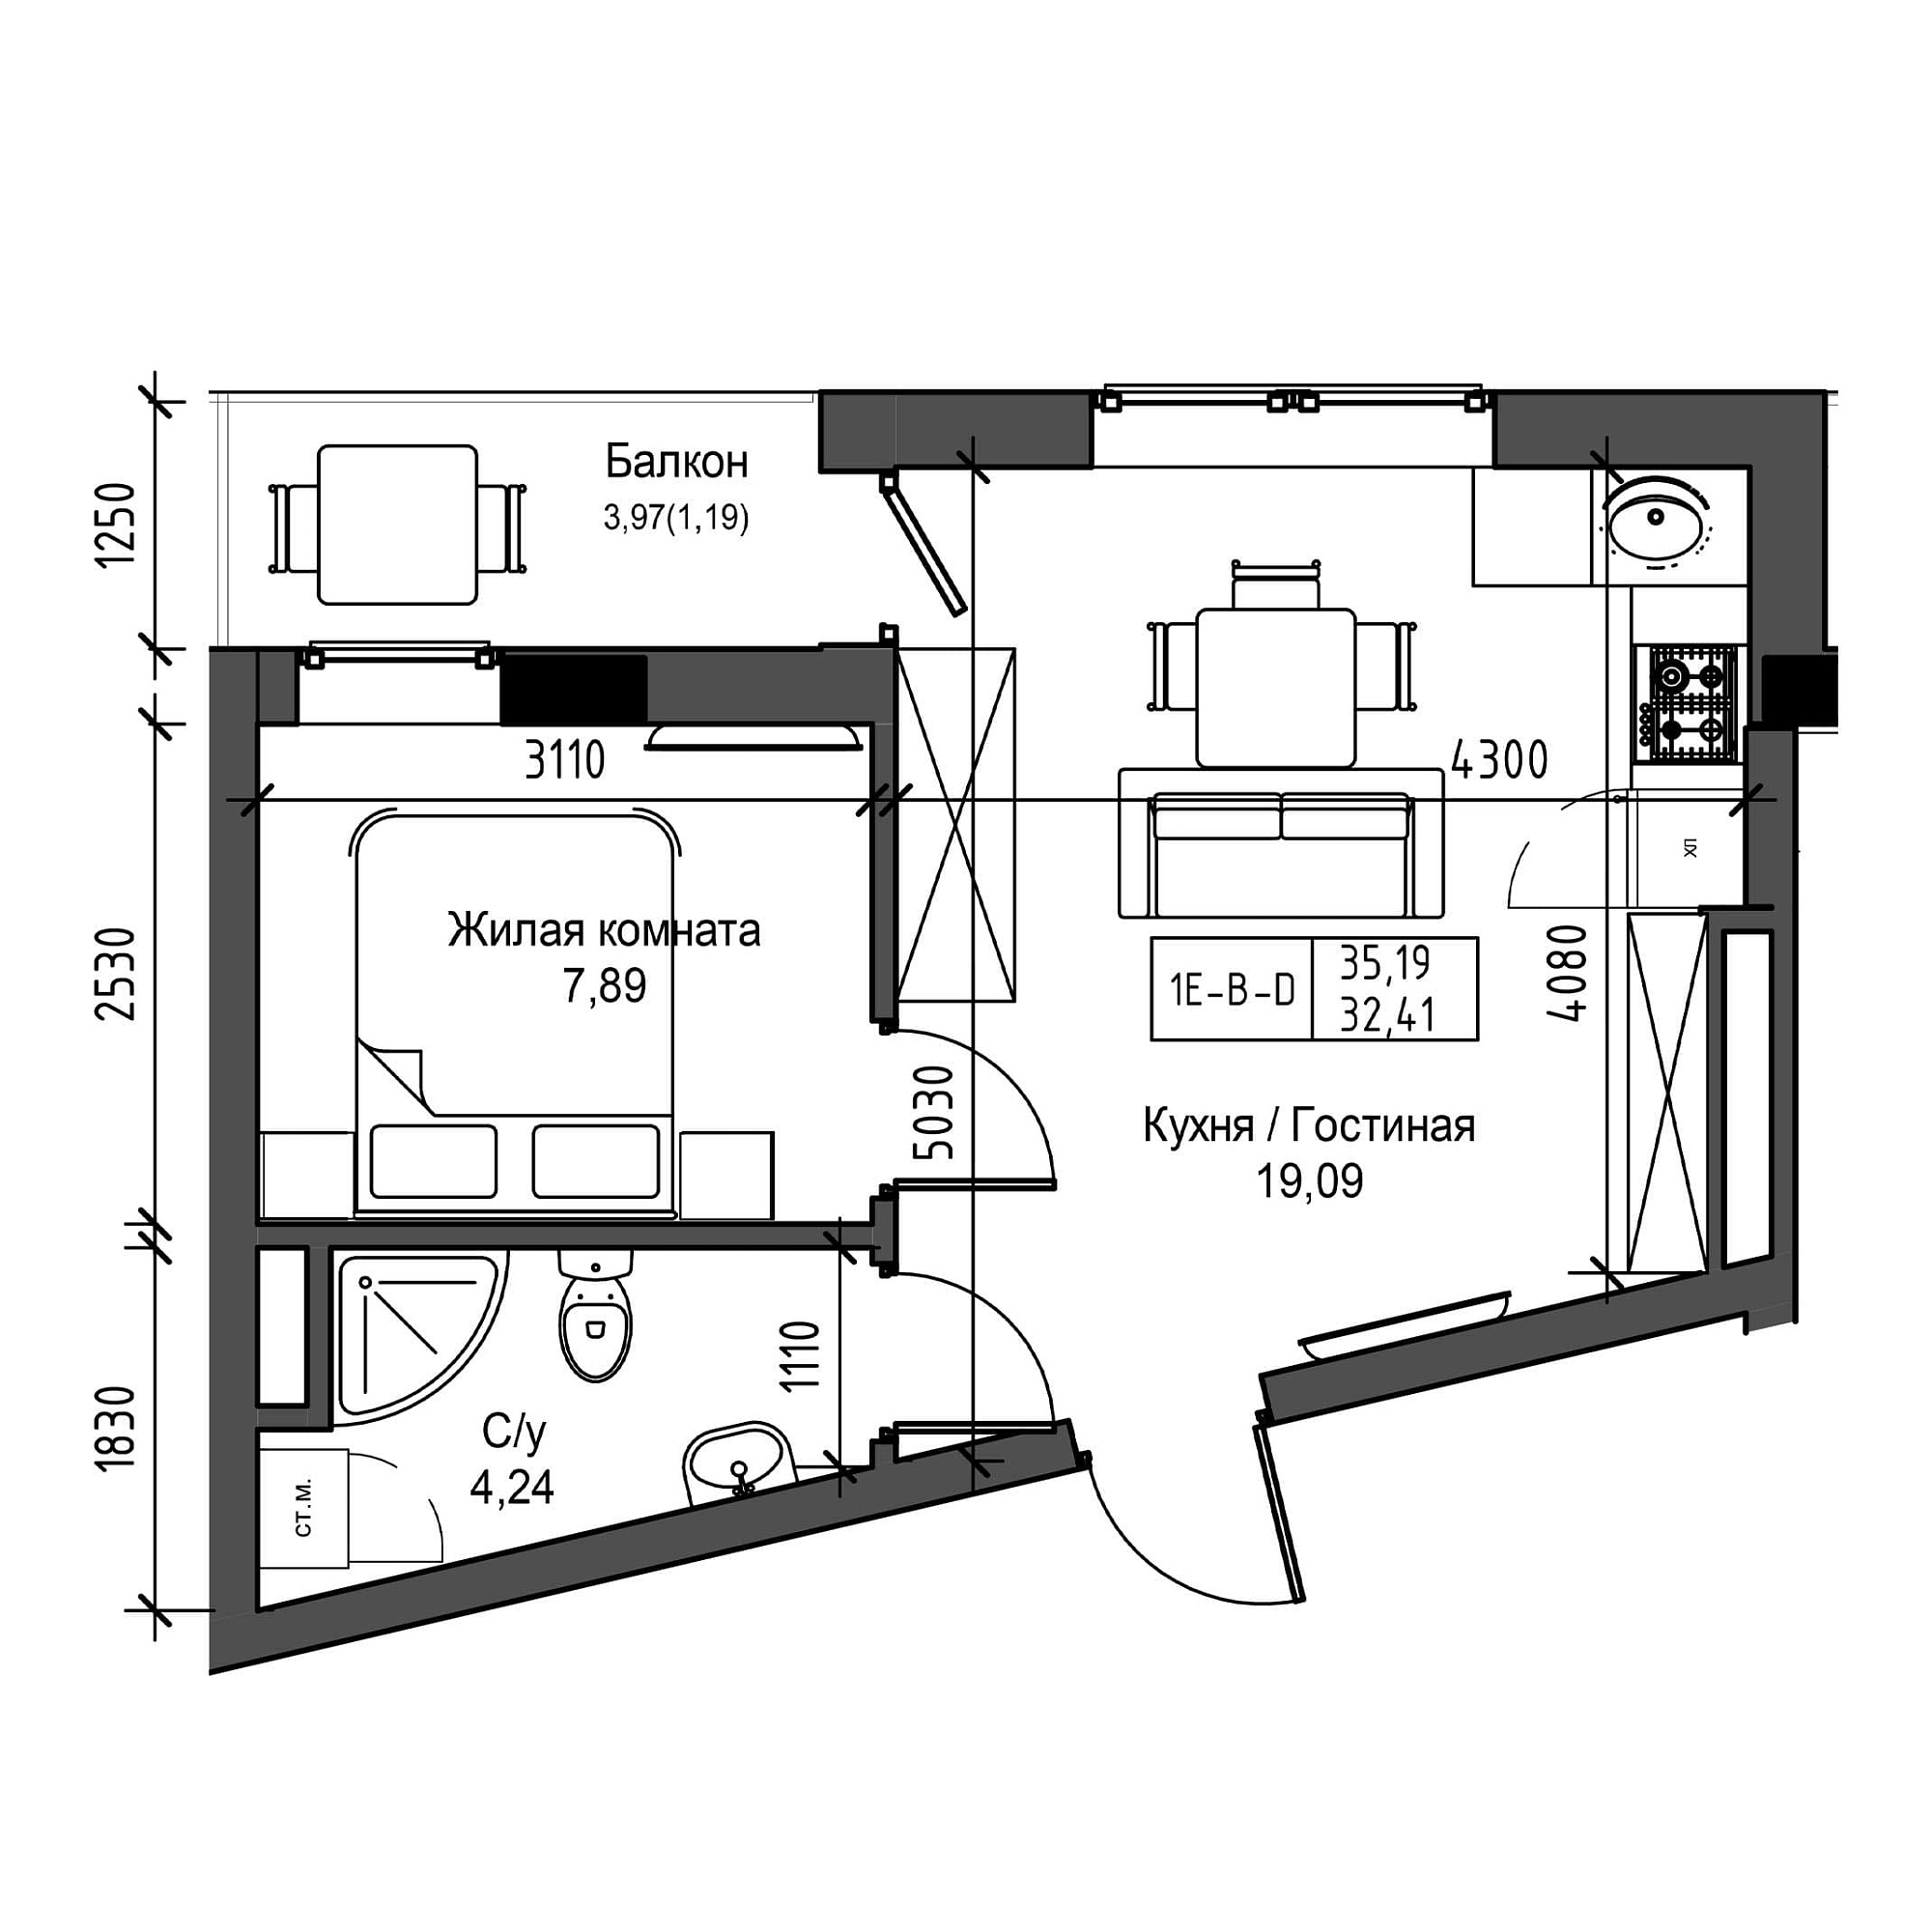 Планування 1-к квартира площею 32.41м2, UM-001-04/0005.